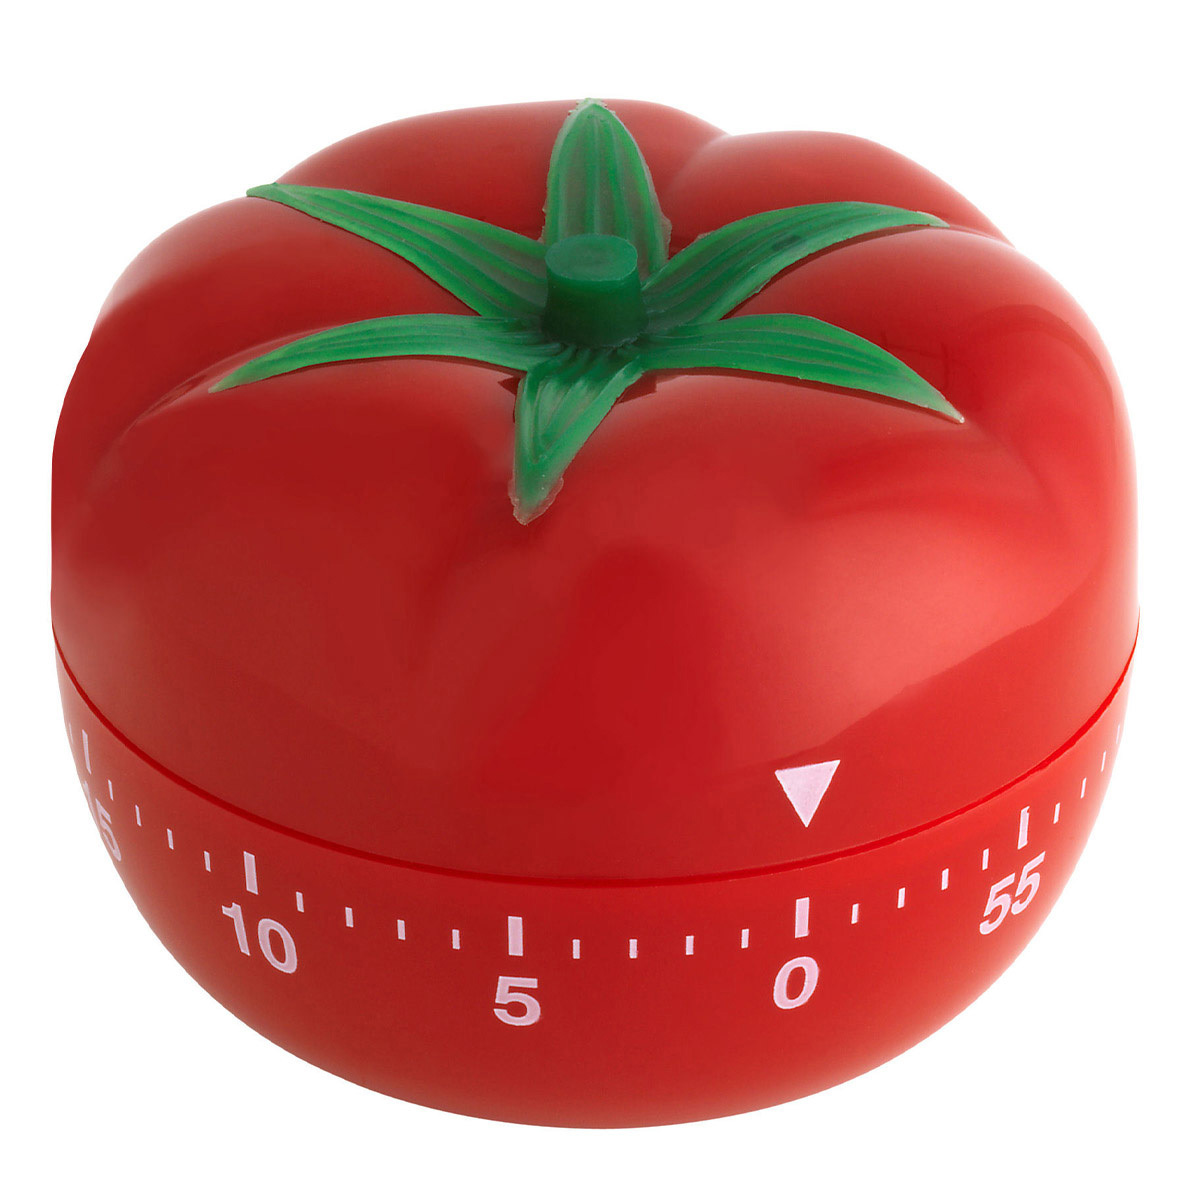 38-1005-analoger-küchen-timer-tomate-1200x1200px.jpg